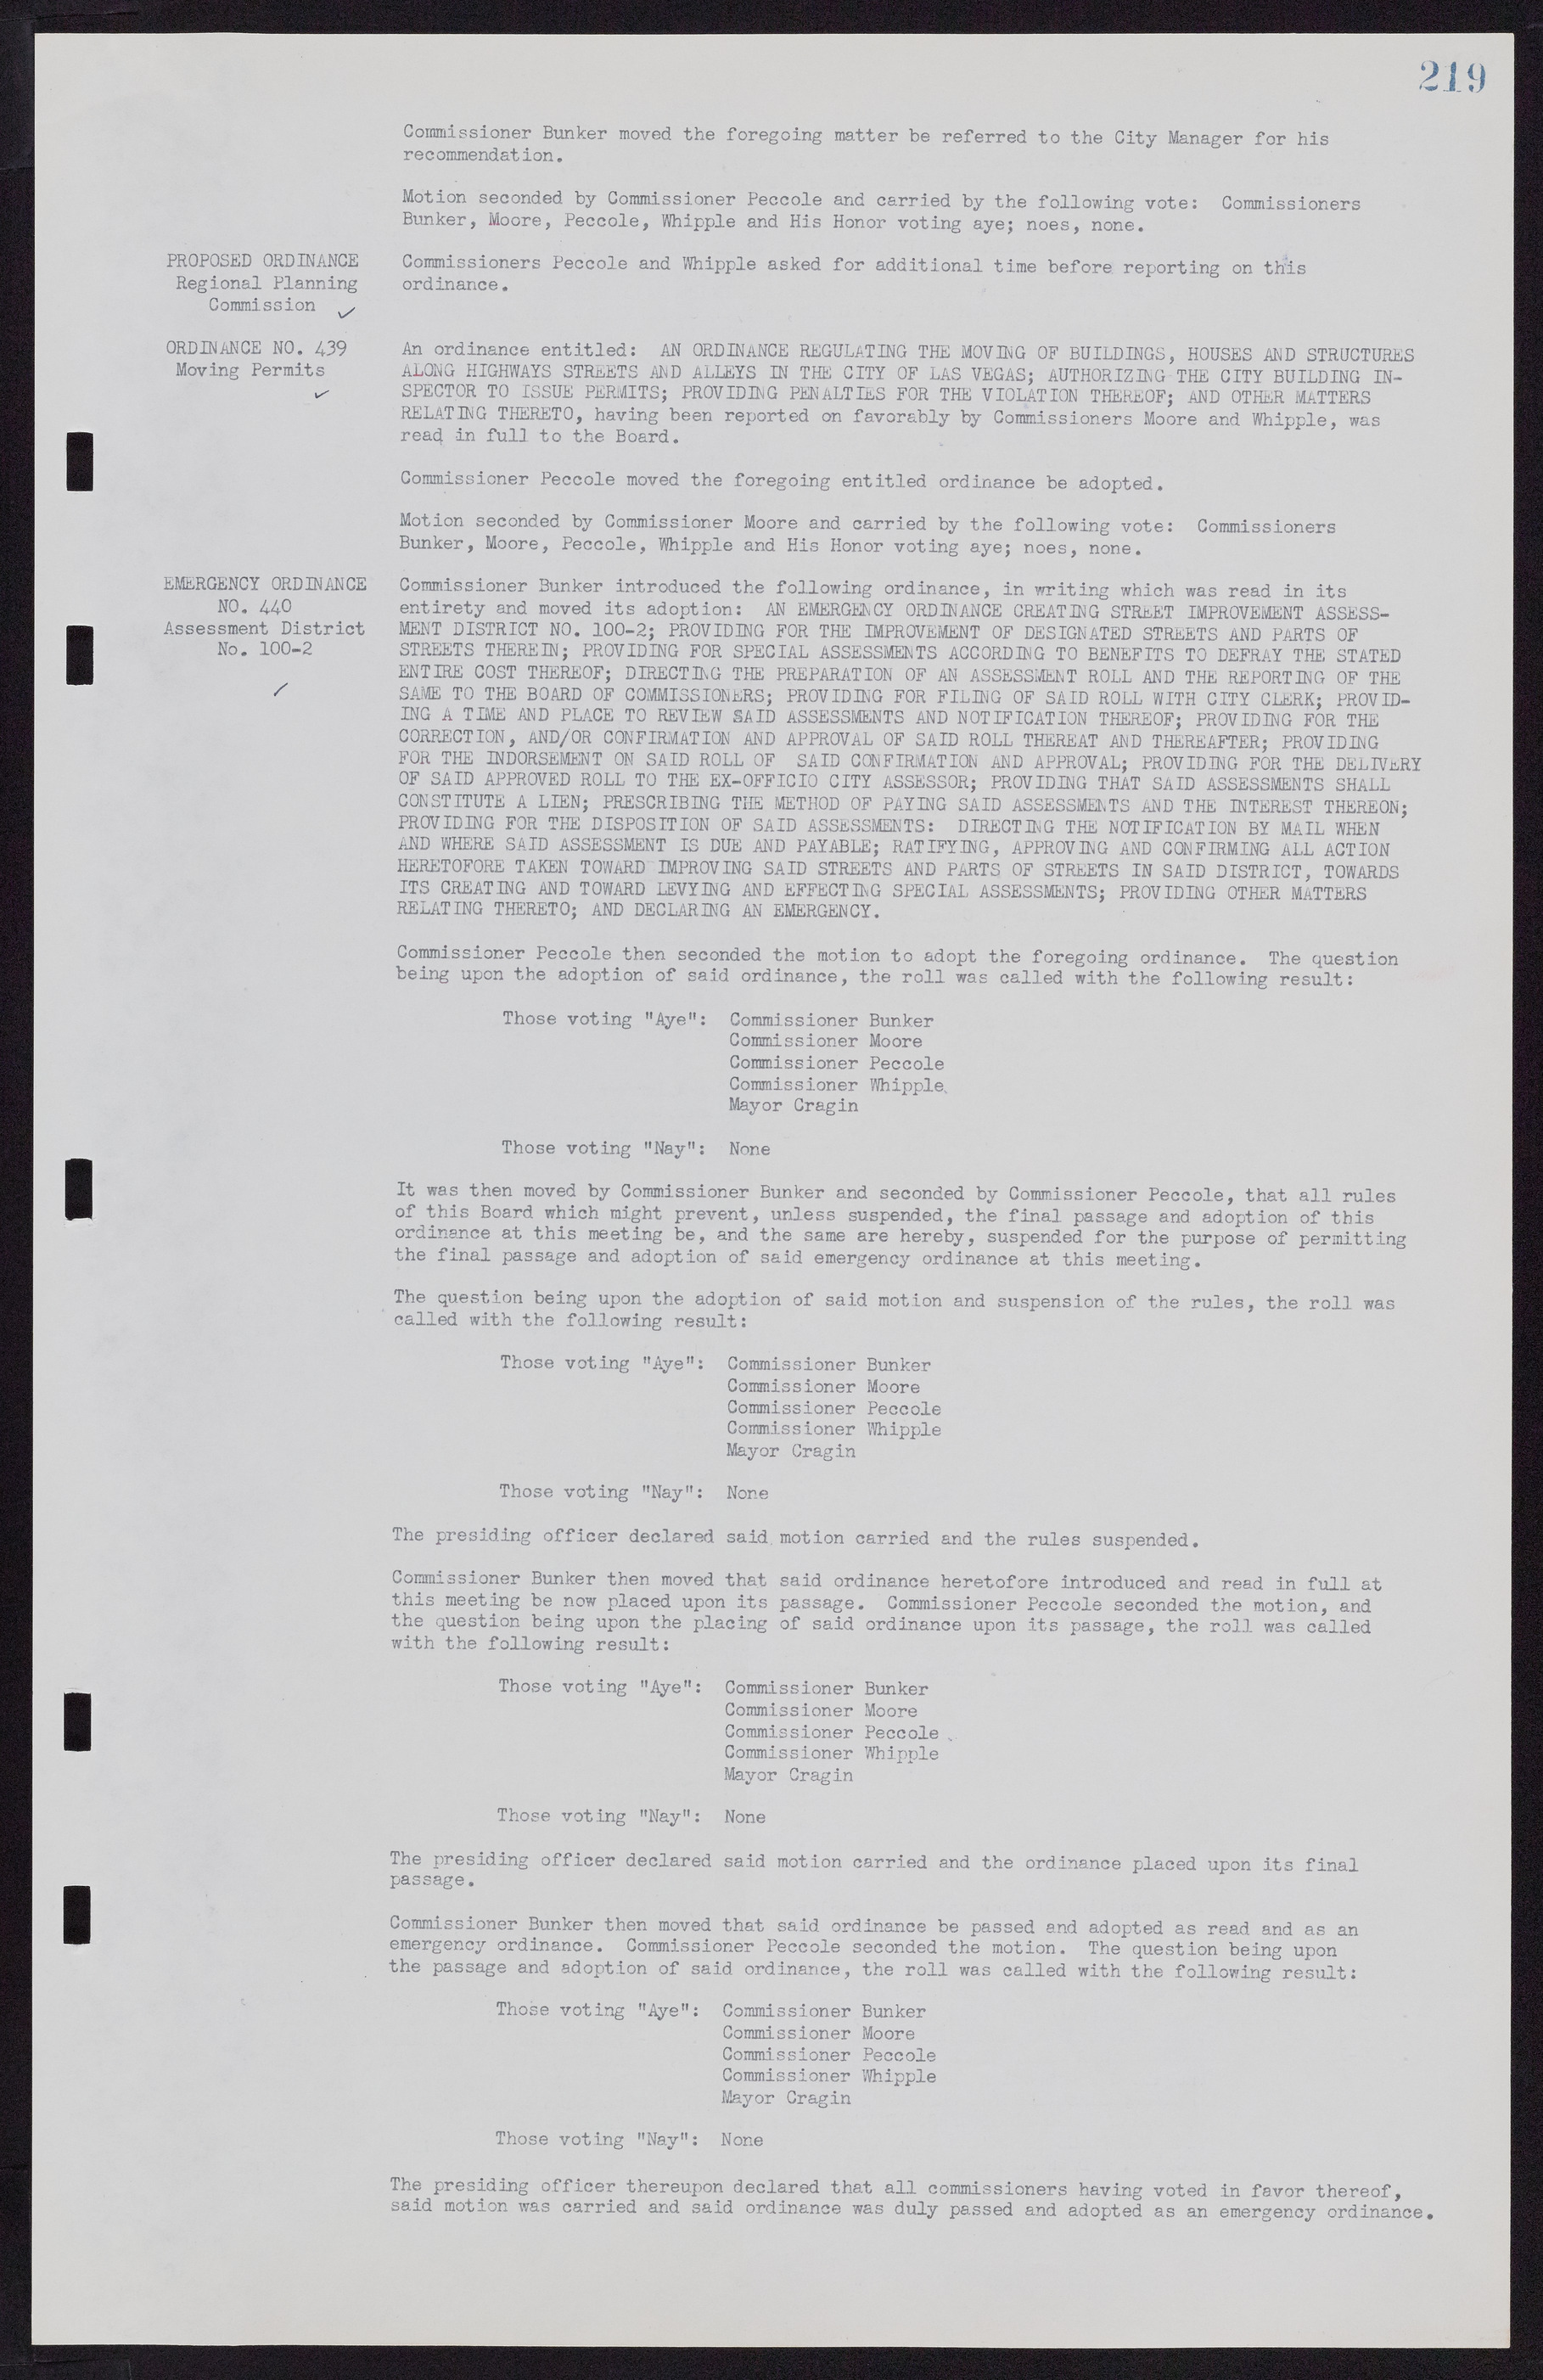 Las Vegas City Commission Minutes, November 7, 1949 to May 21, 1952, lvc000007-229